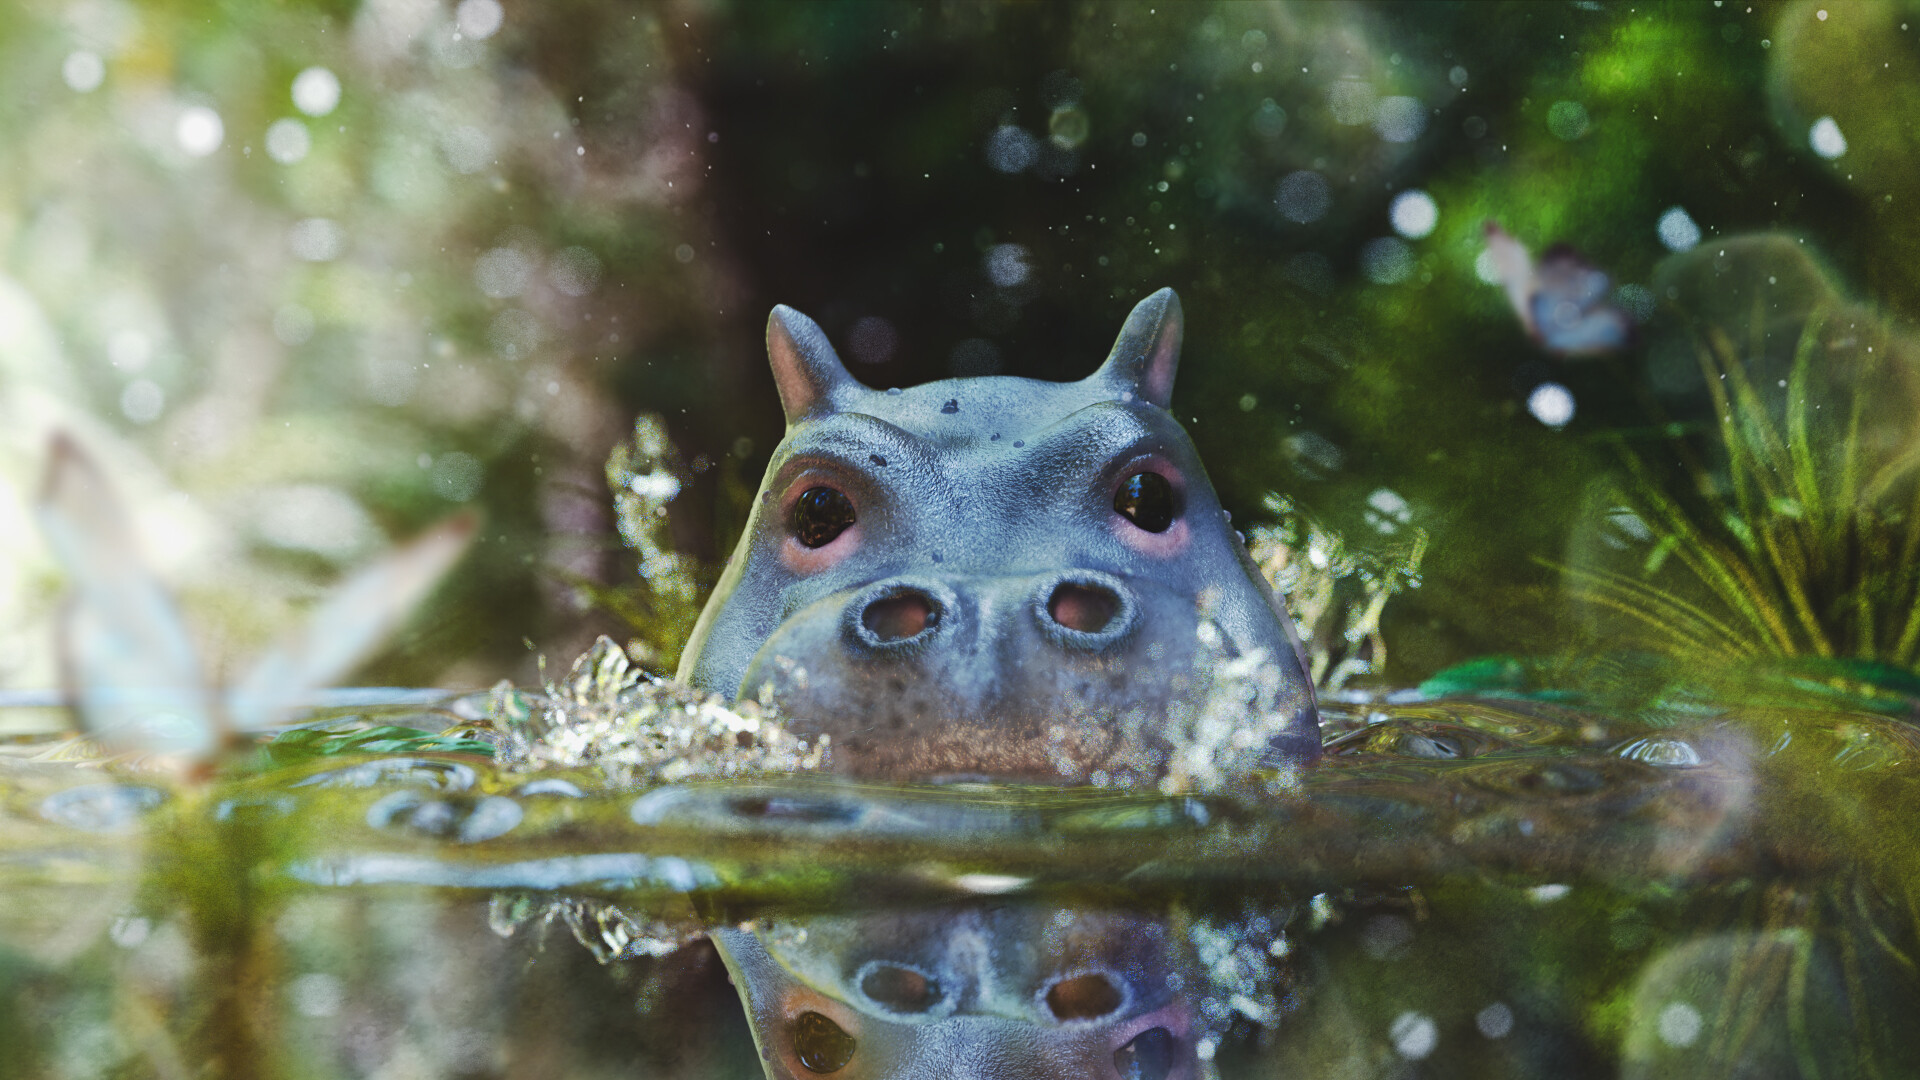 Baby Hippo having a swim!